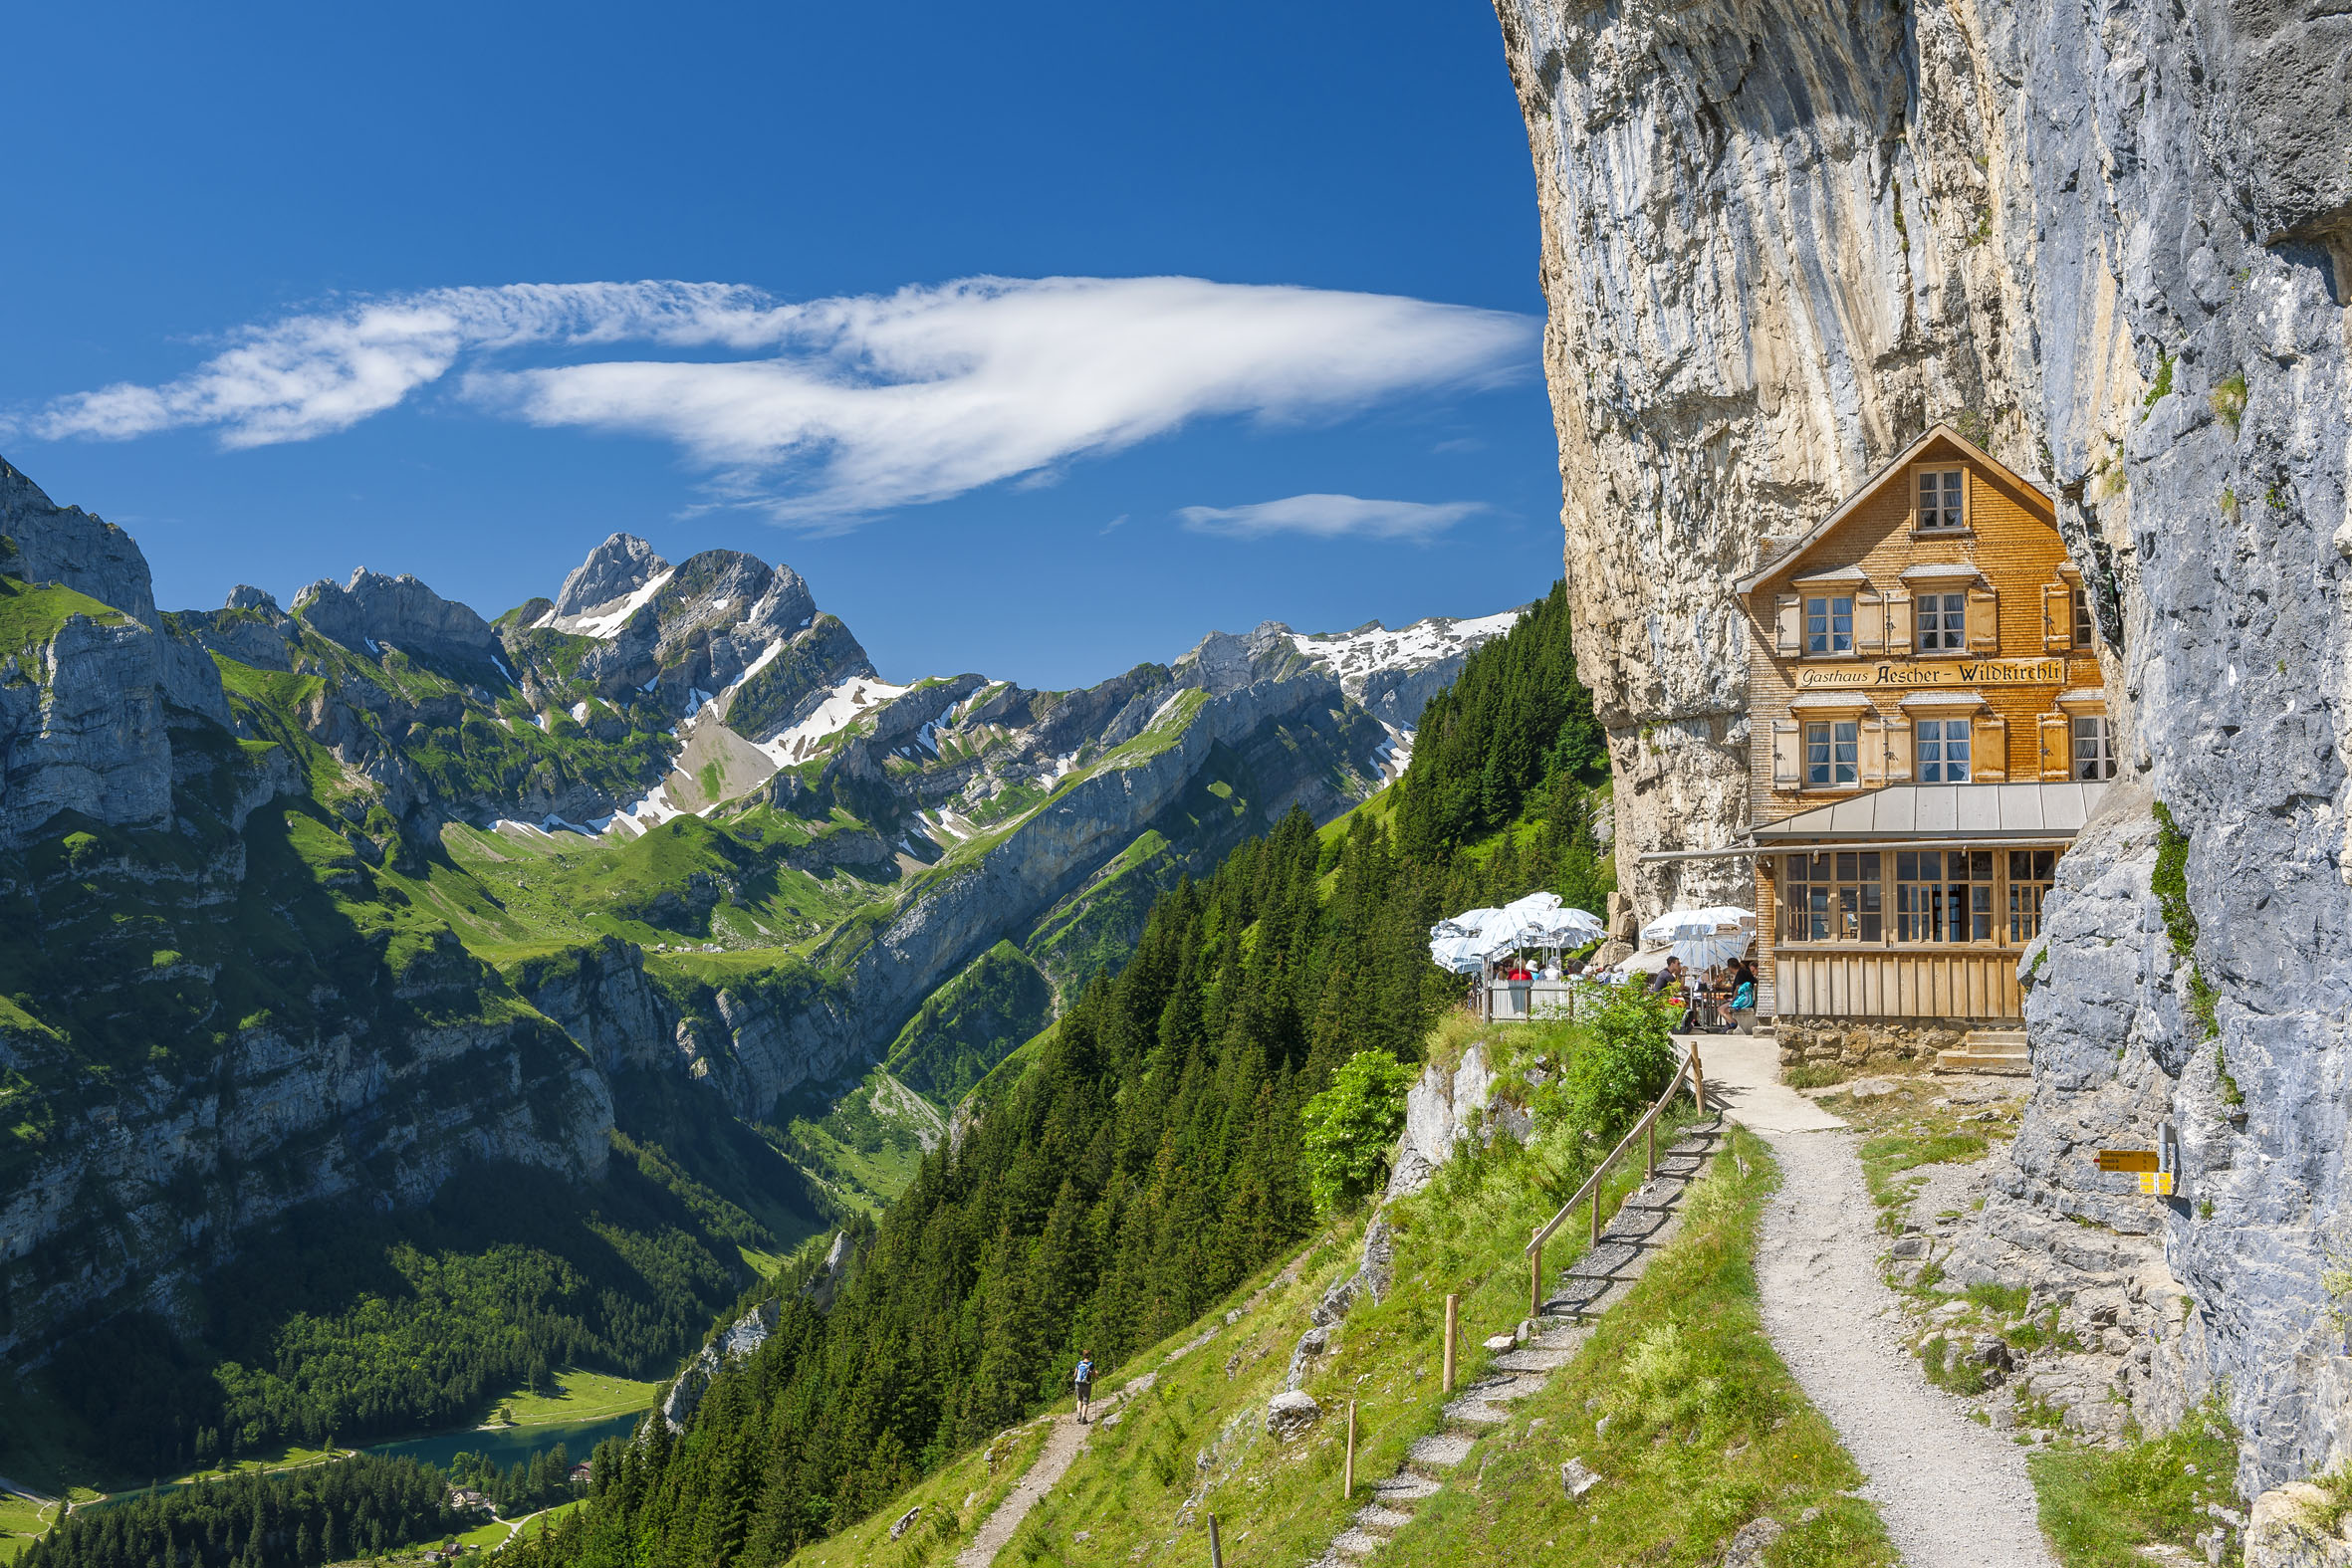 Berggasthaus Aescher Magical Cliffside Mountain House In Switzerland